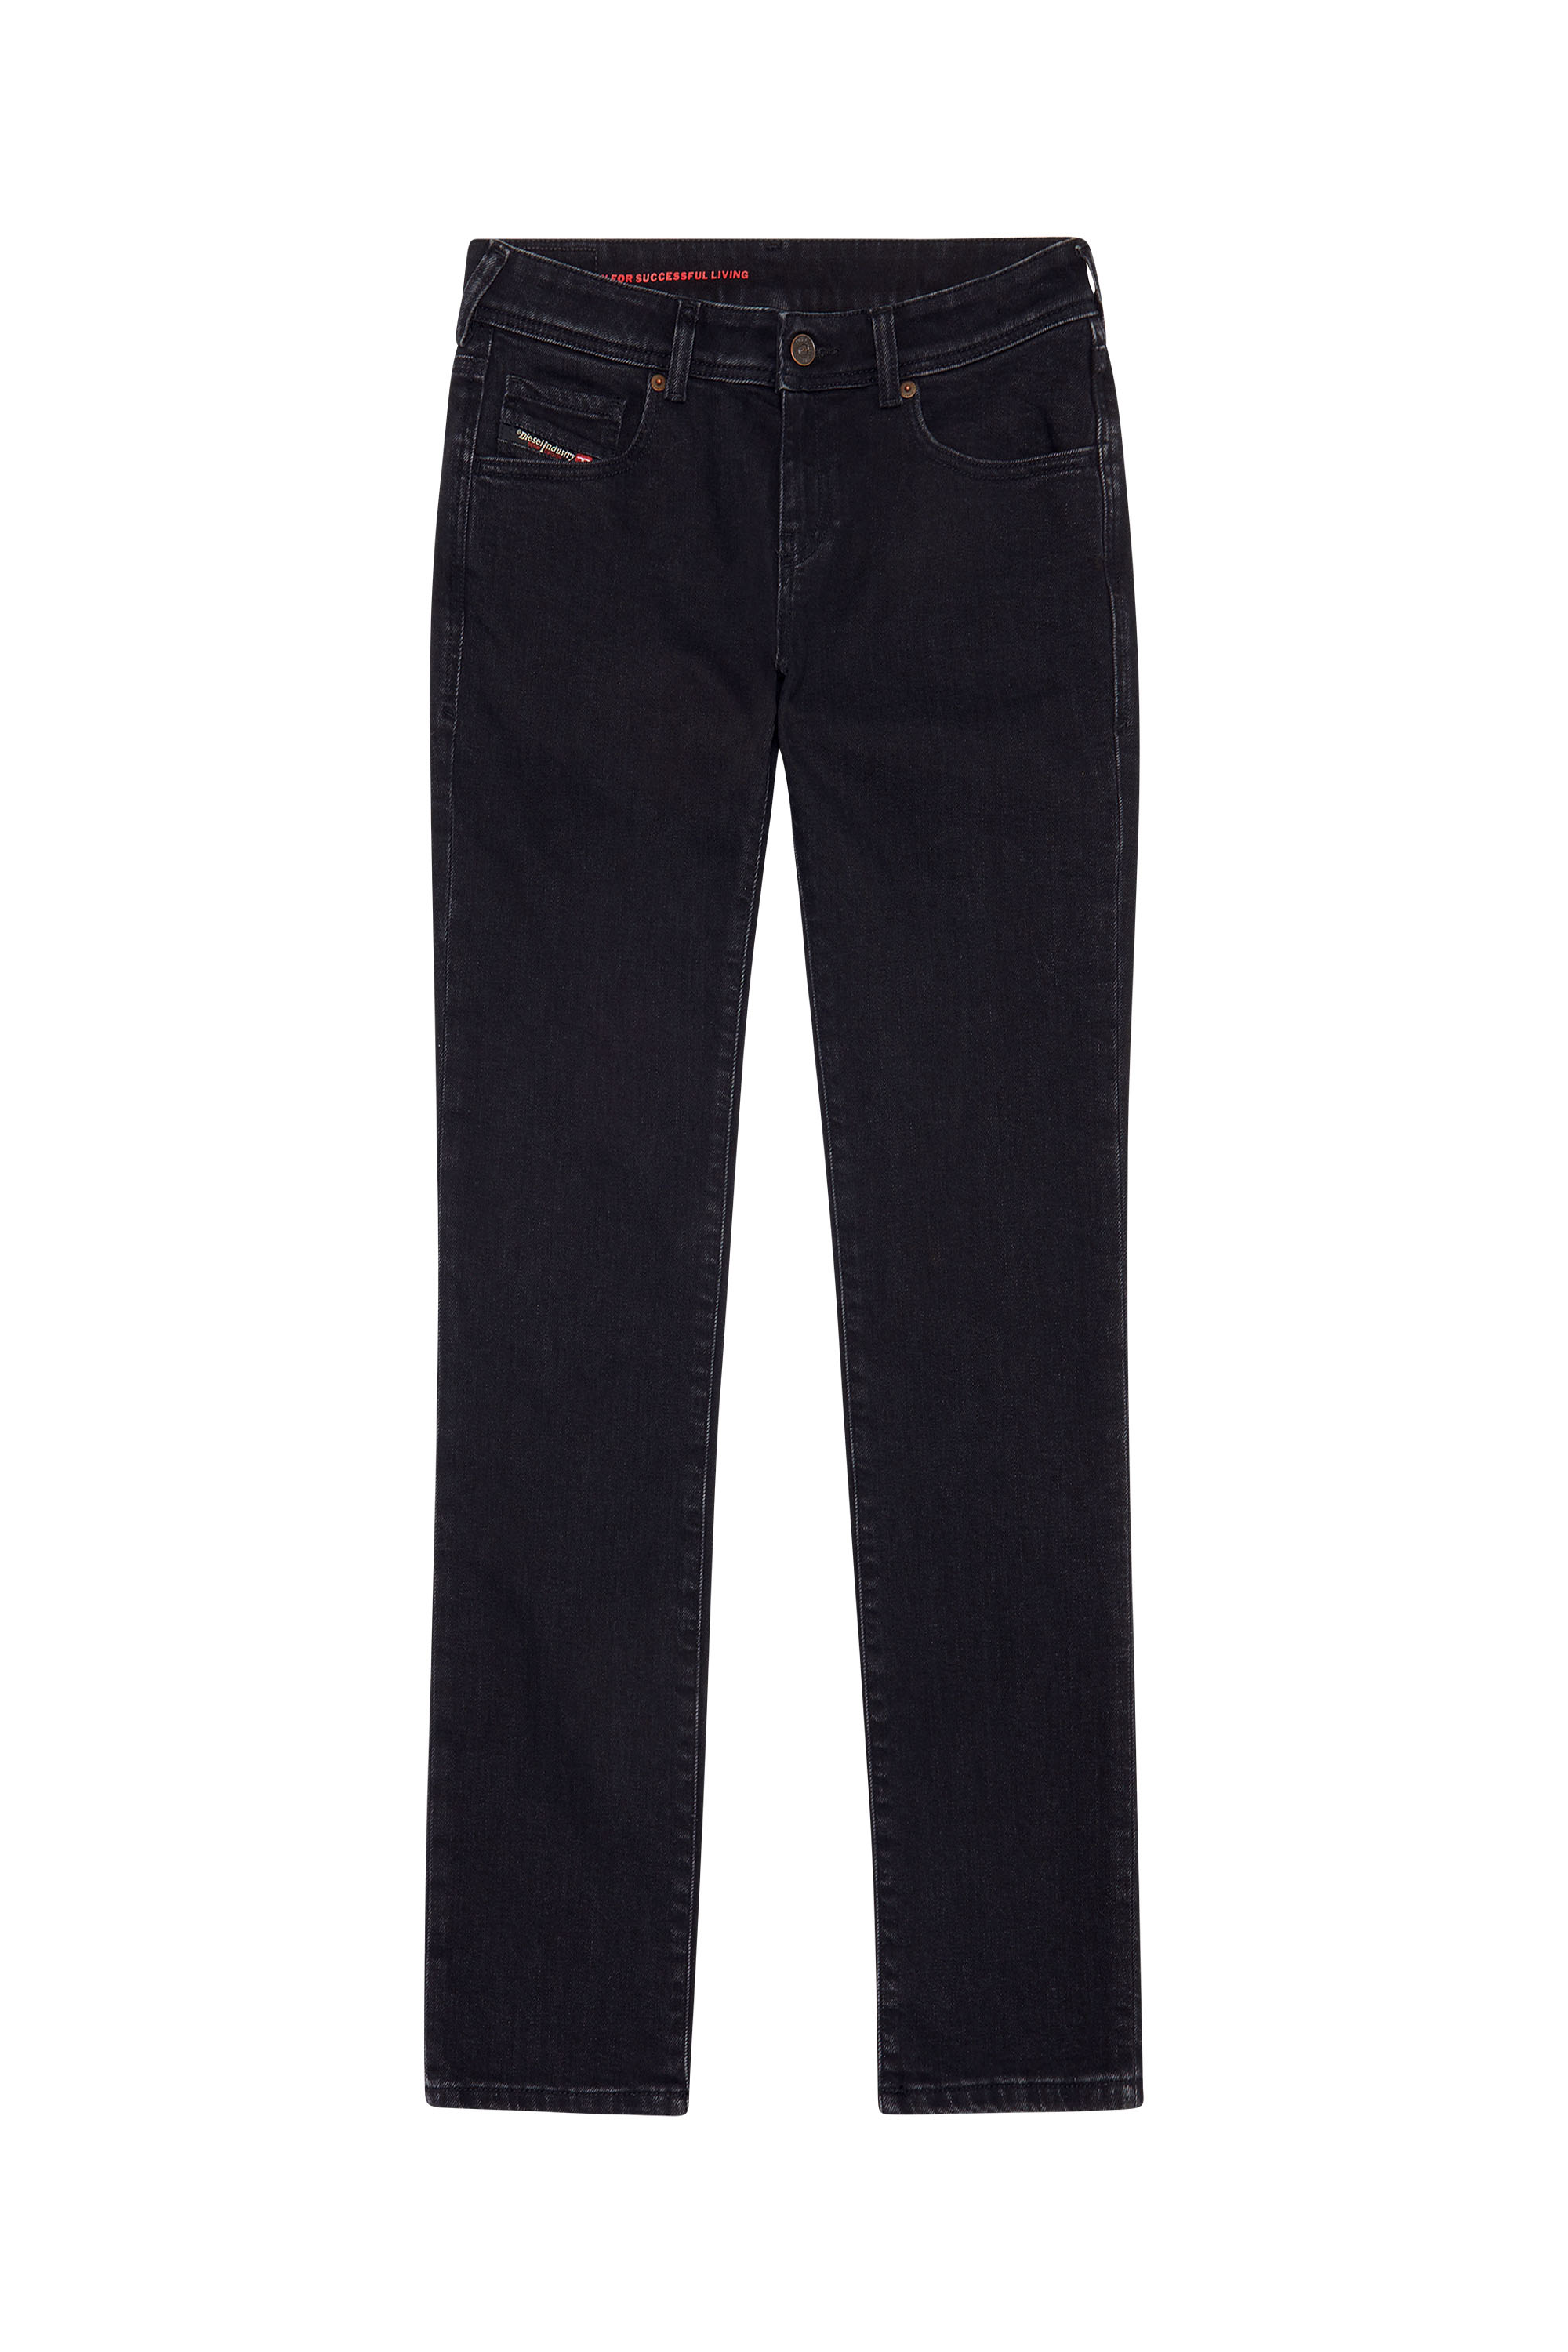 2002 Z9C25 Straight Jeans, Black/Dark grey - Jeans